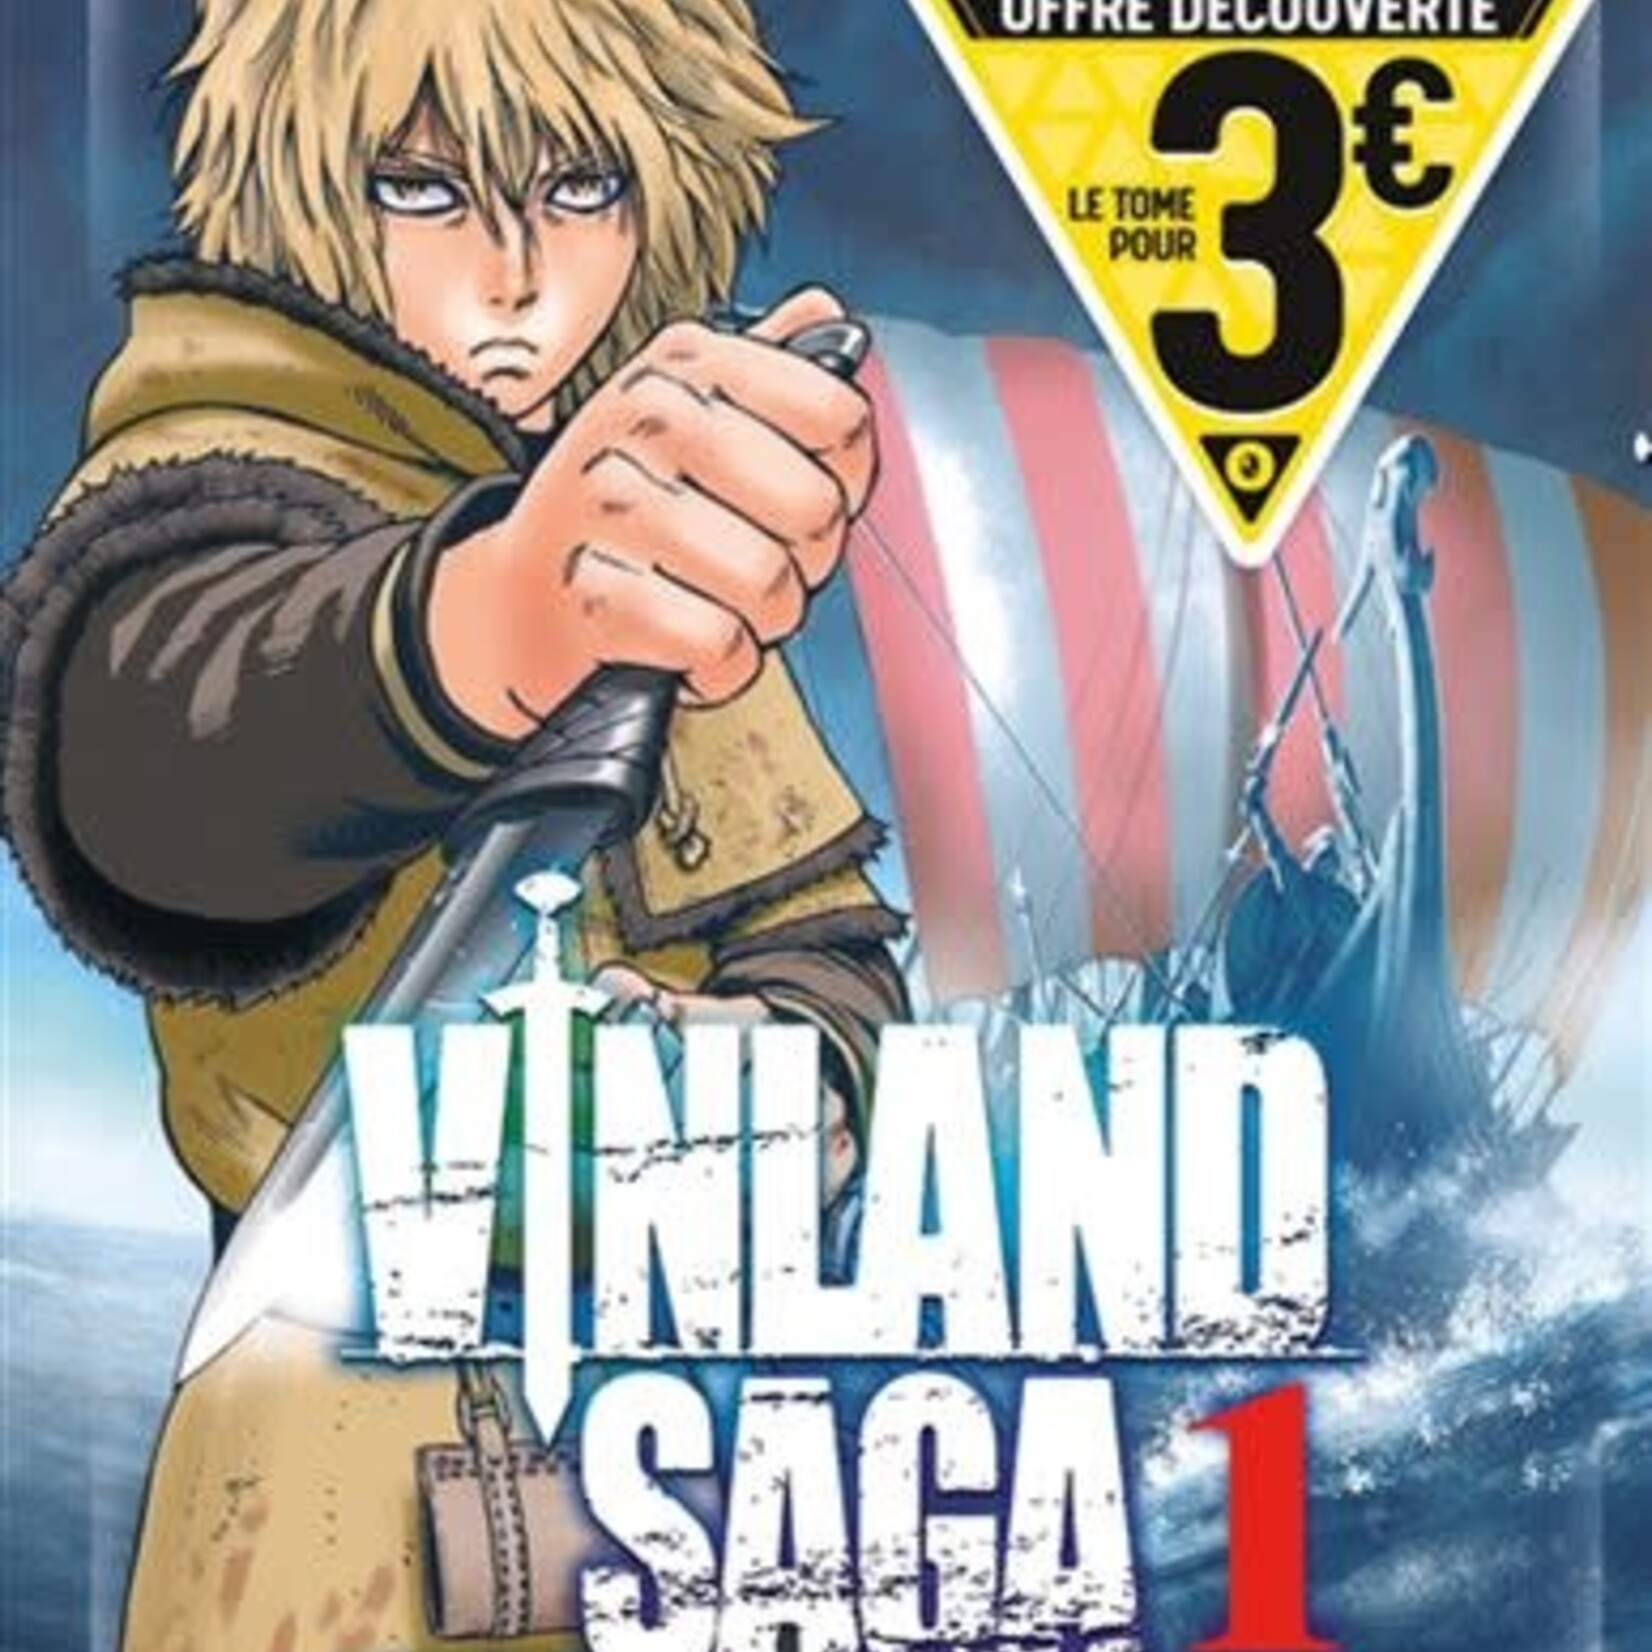 Kurokawa Manga - Vinland Saga Tome 01 (Offre découverte)